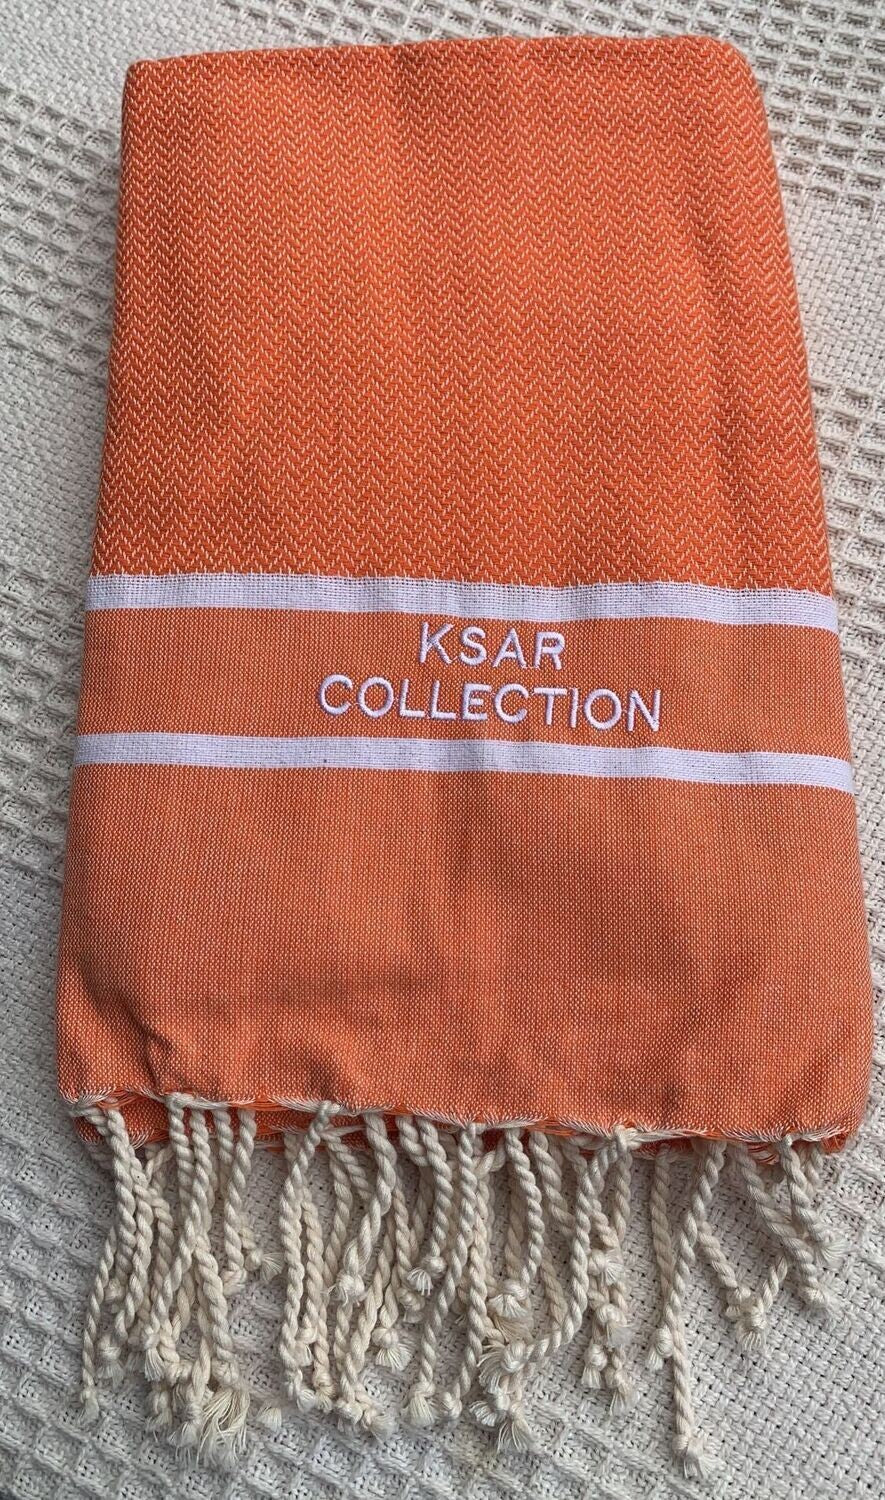 ksar collection orange fouta towel